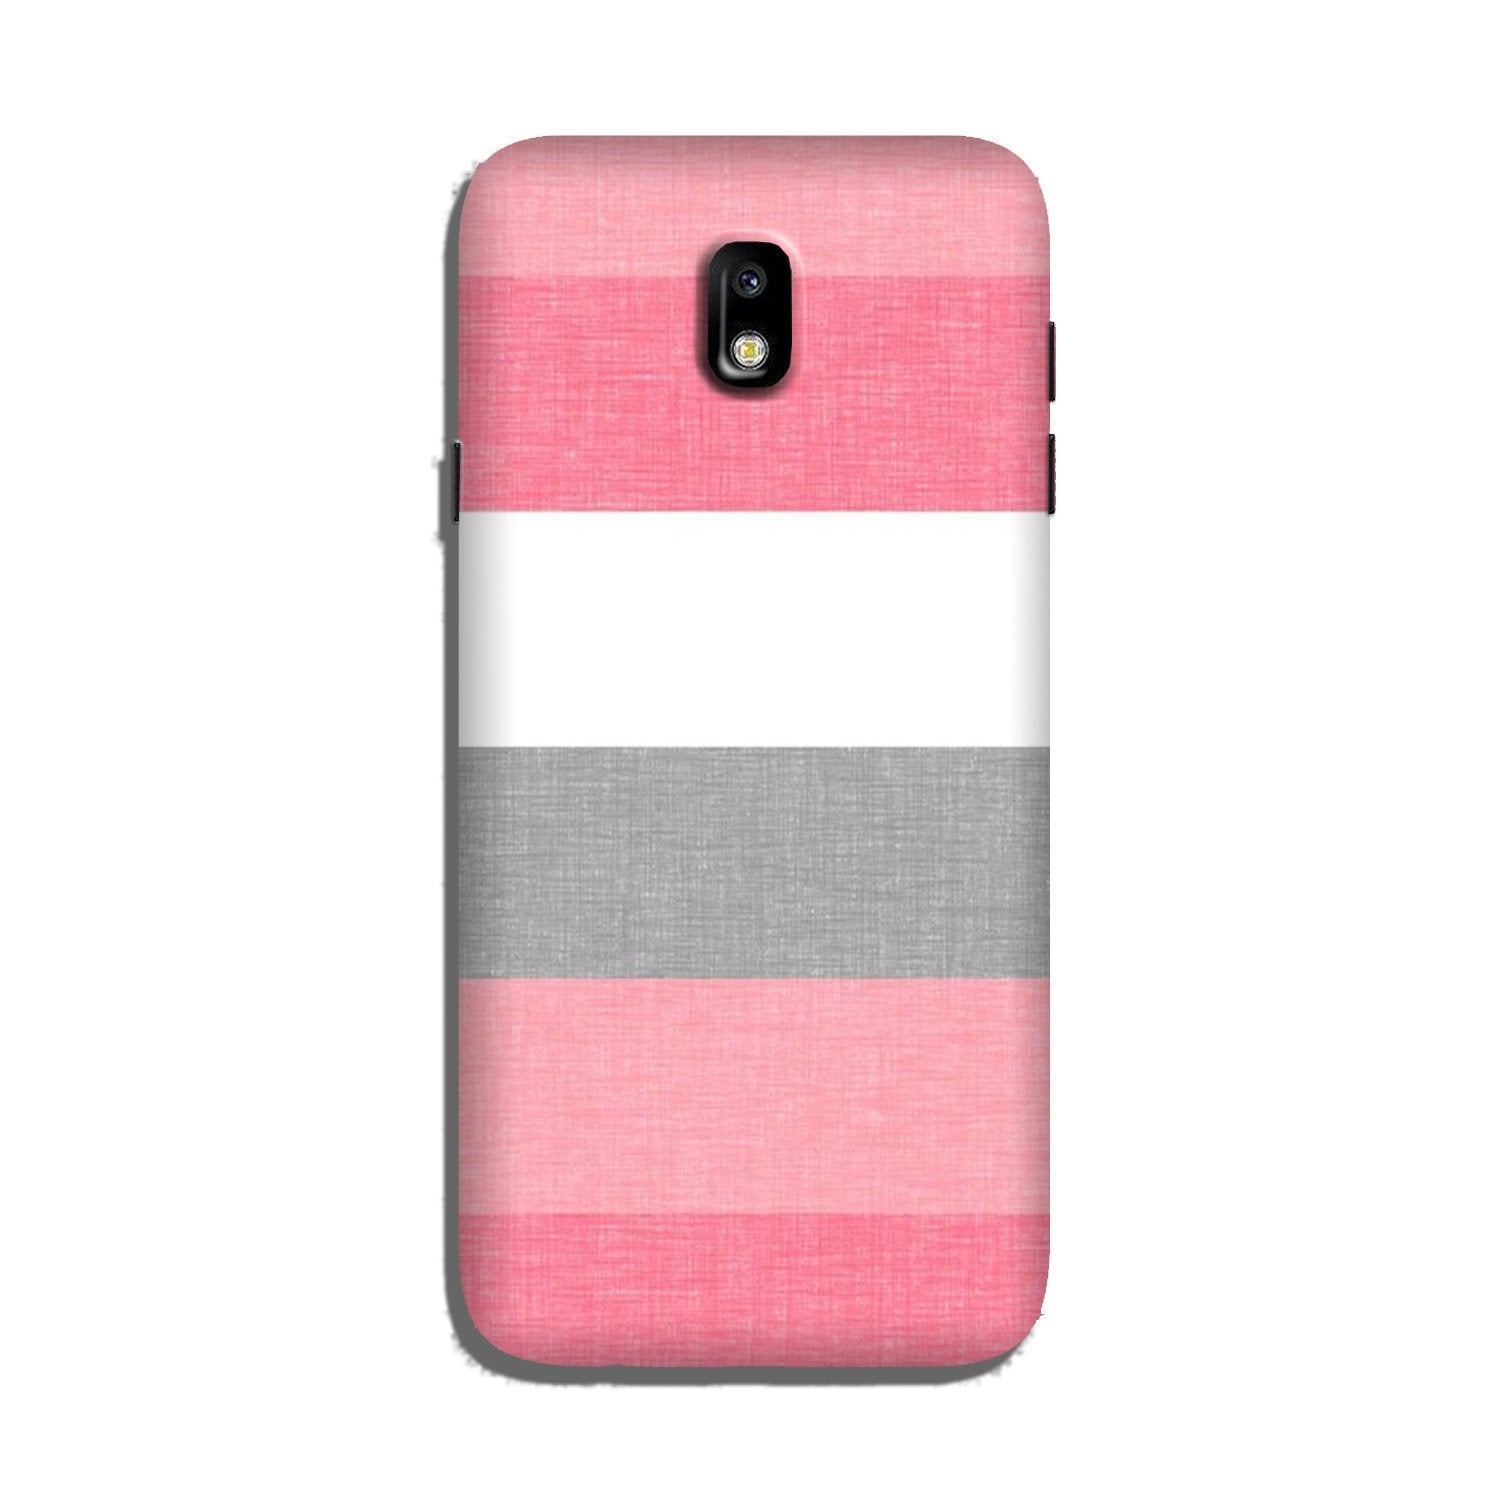 Pink white pattern Case for Galaxy J3 Pro